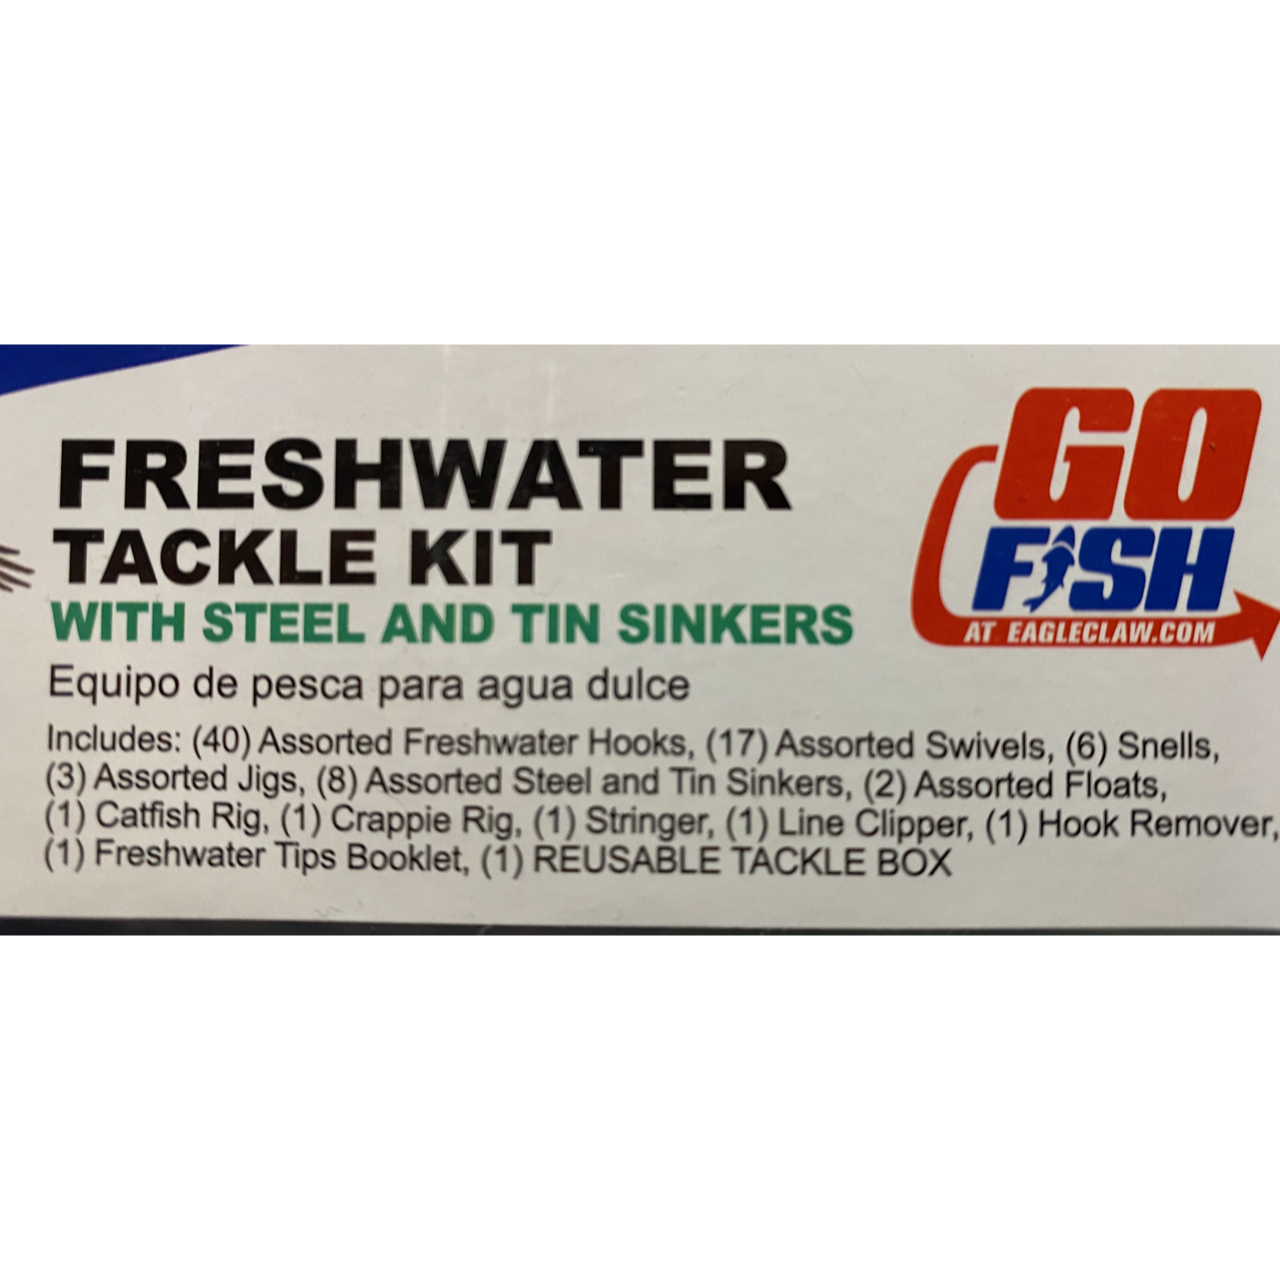 Freshwater Tackle Kit